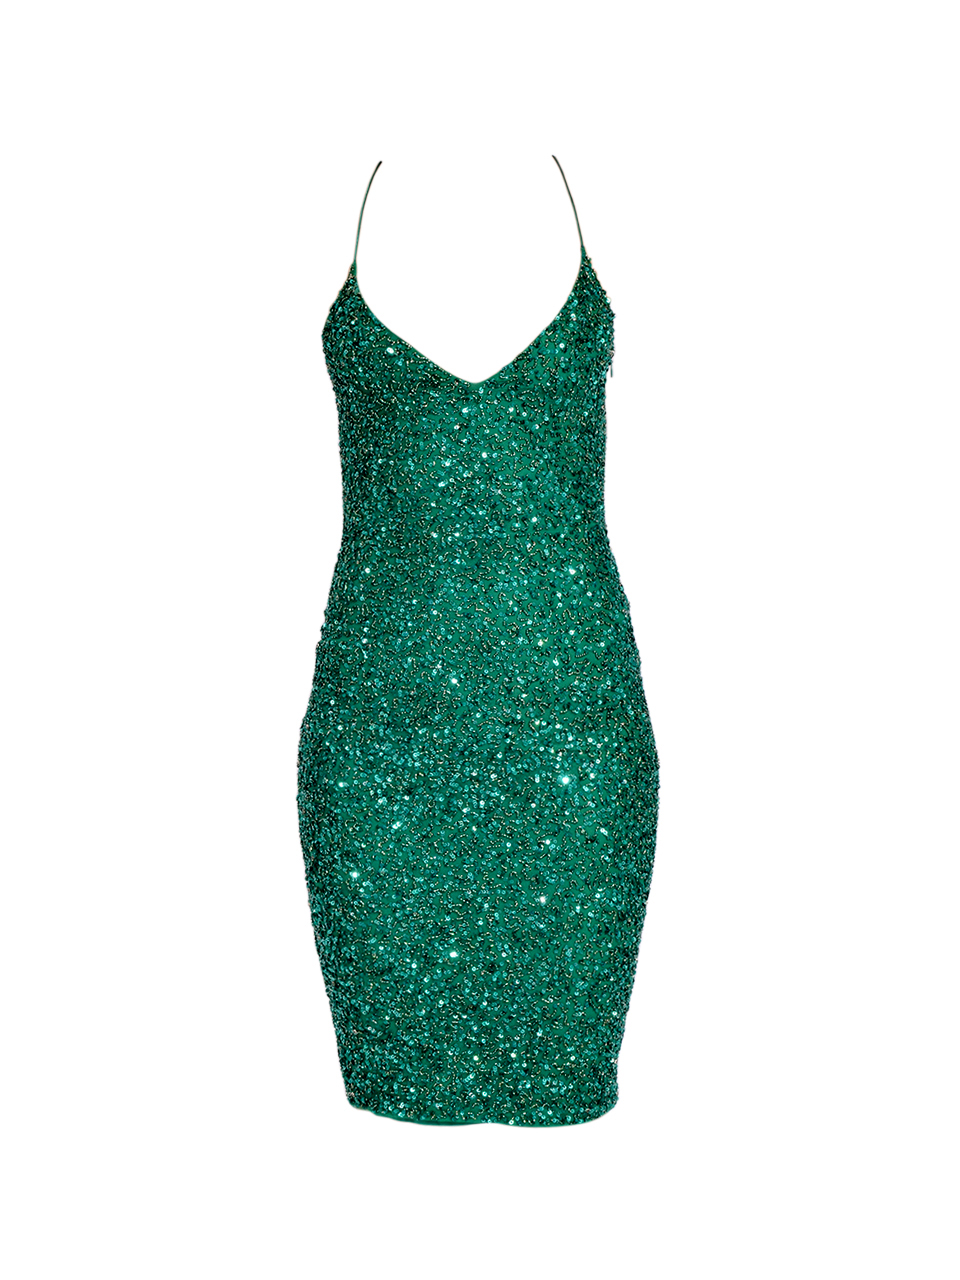 RETROFETE Billie Dress in Emerald Product Shot 